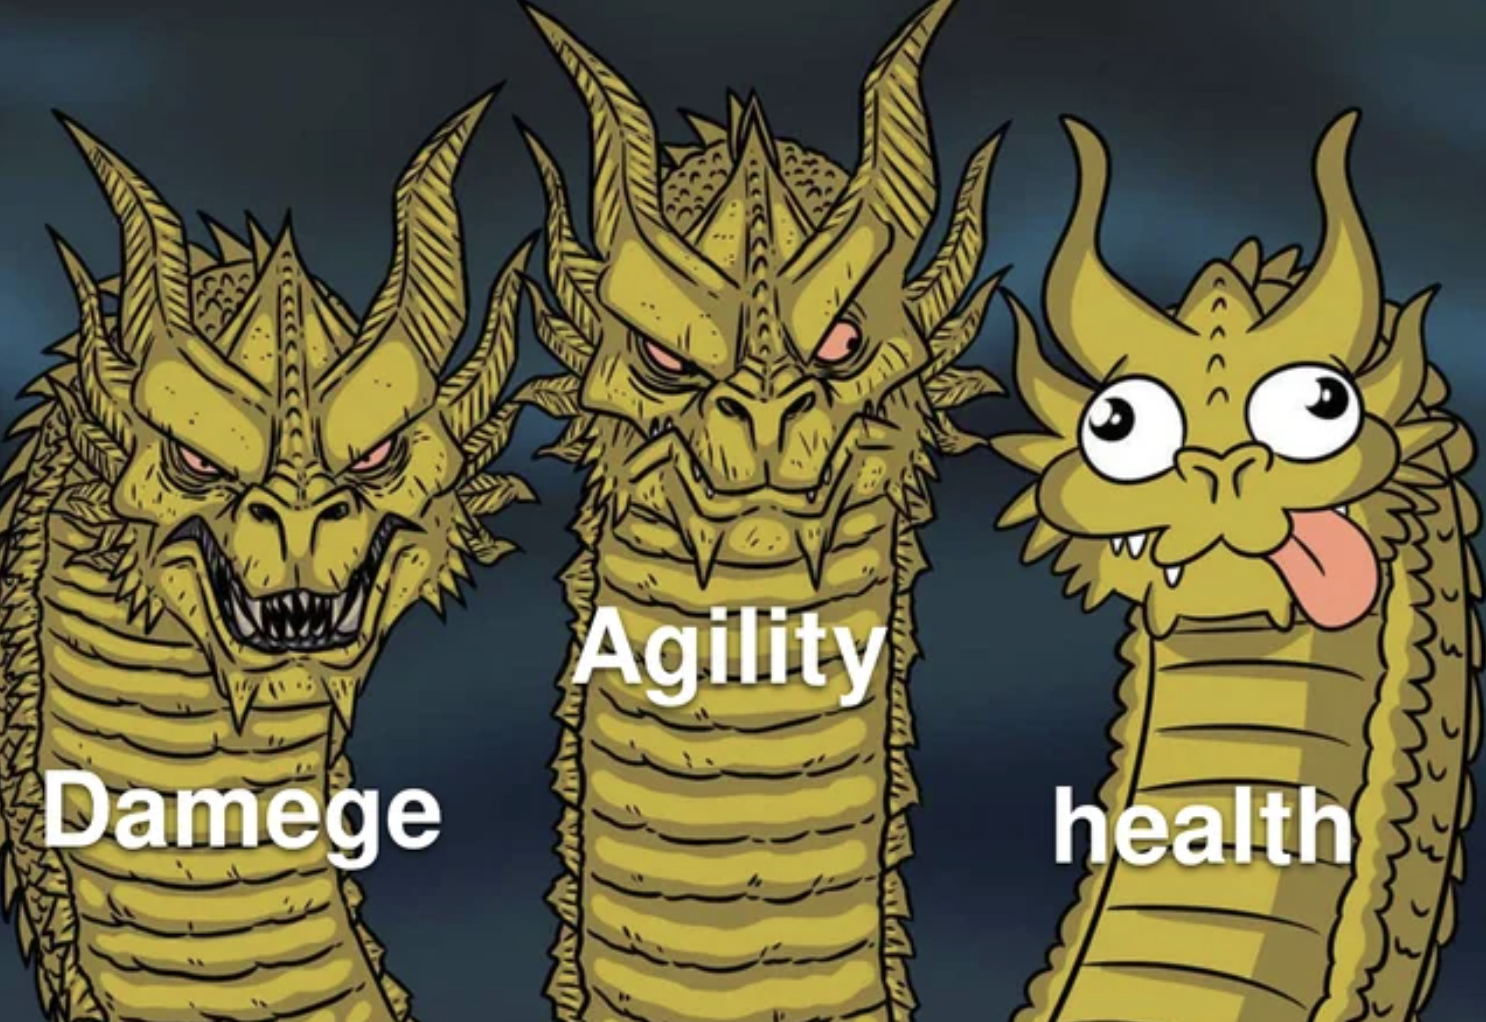 gaming memes - Damege Agility wana health